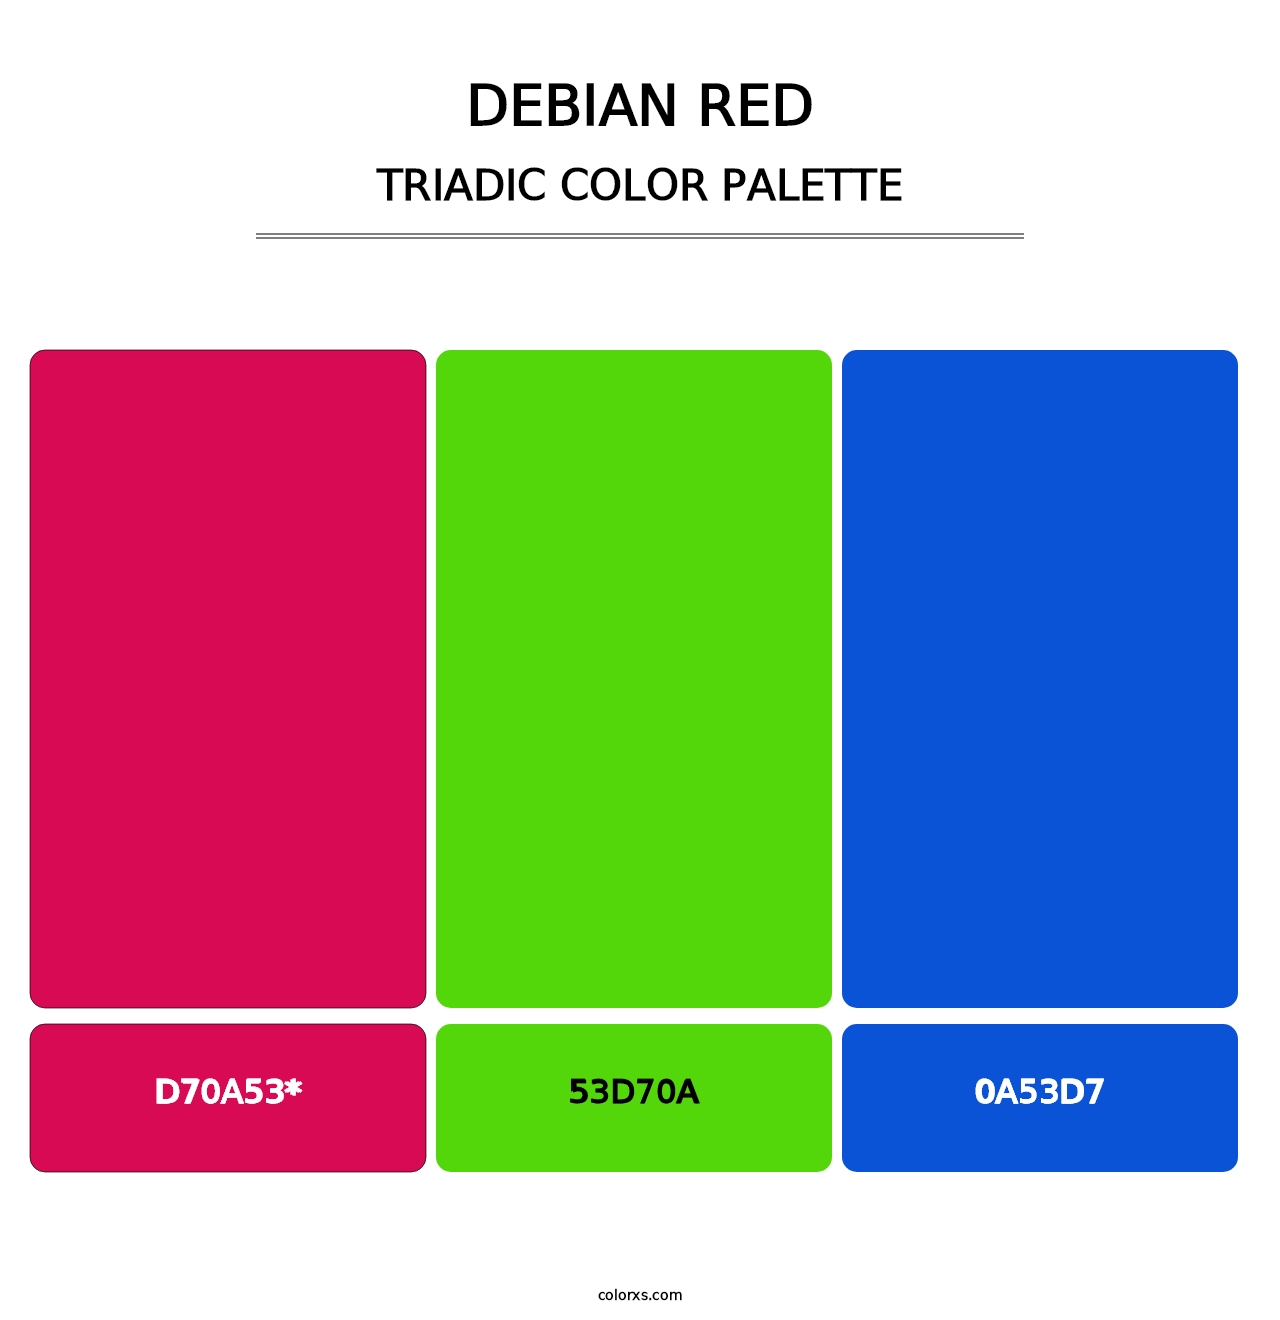 Debian red - Triadic Color Palette